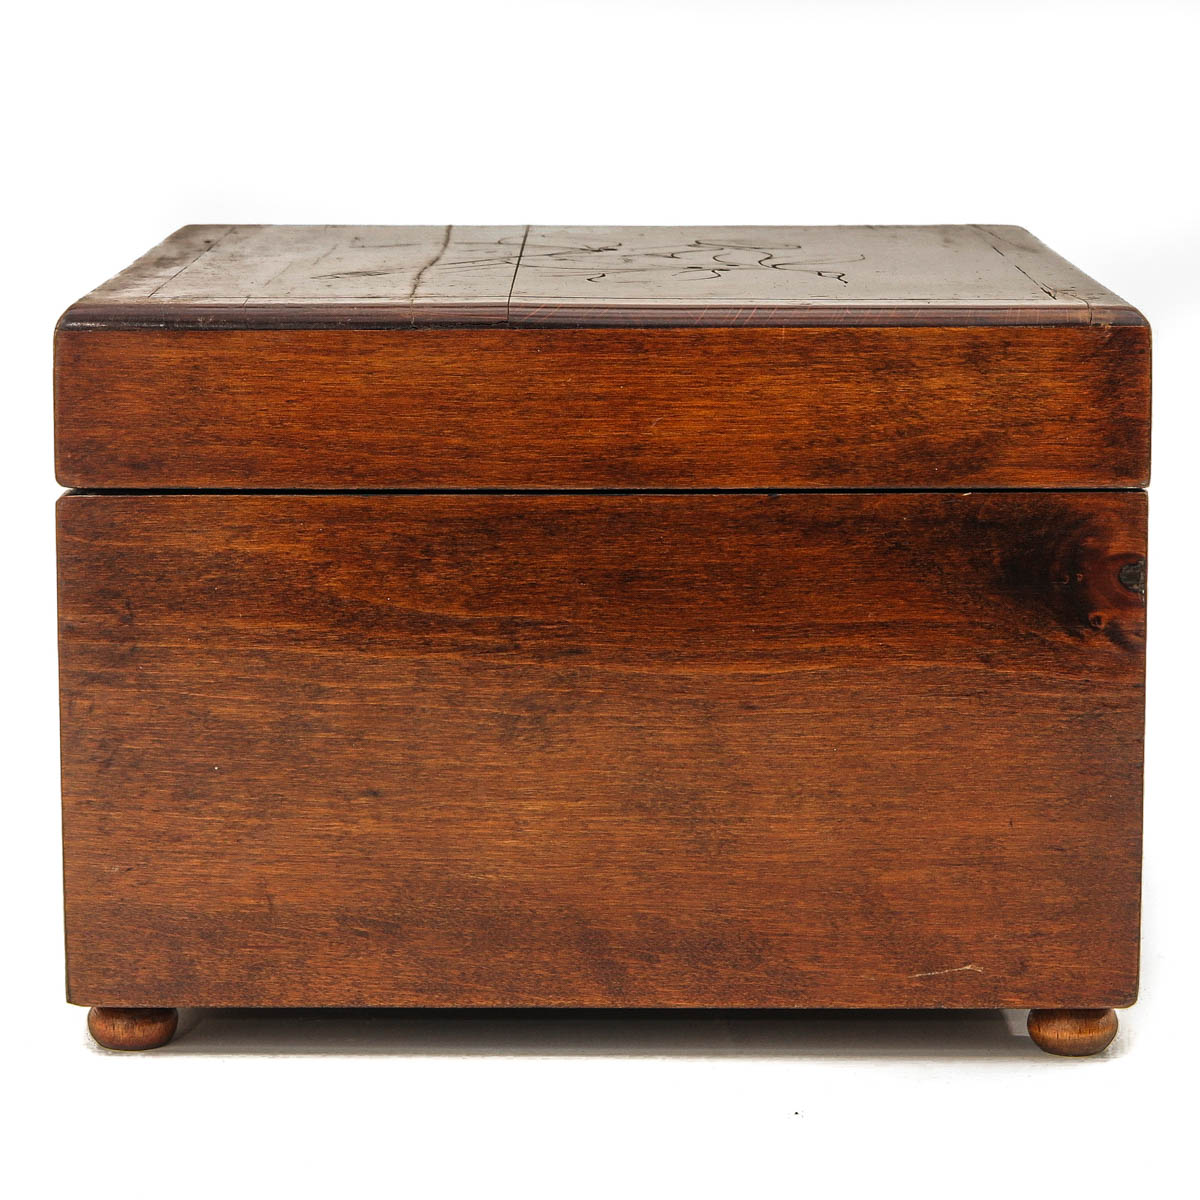 A 19th Century Music Box - Image 4 of 10